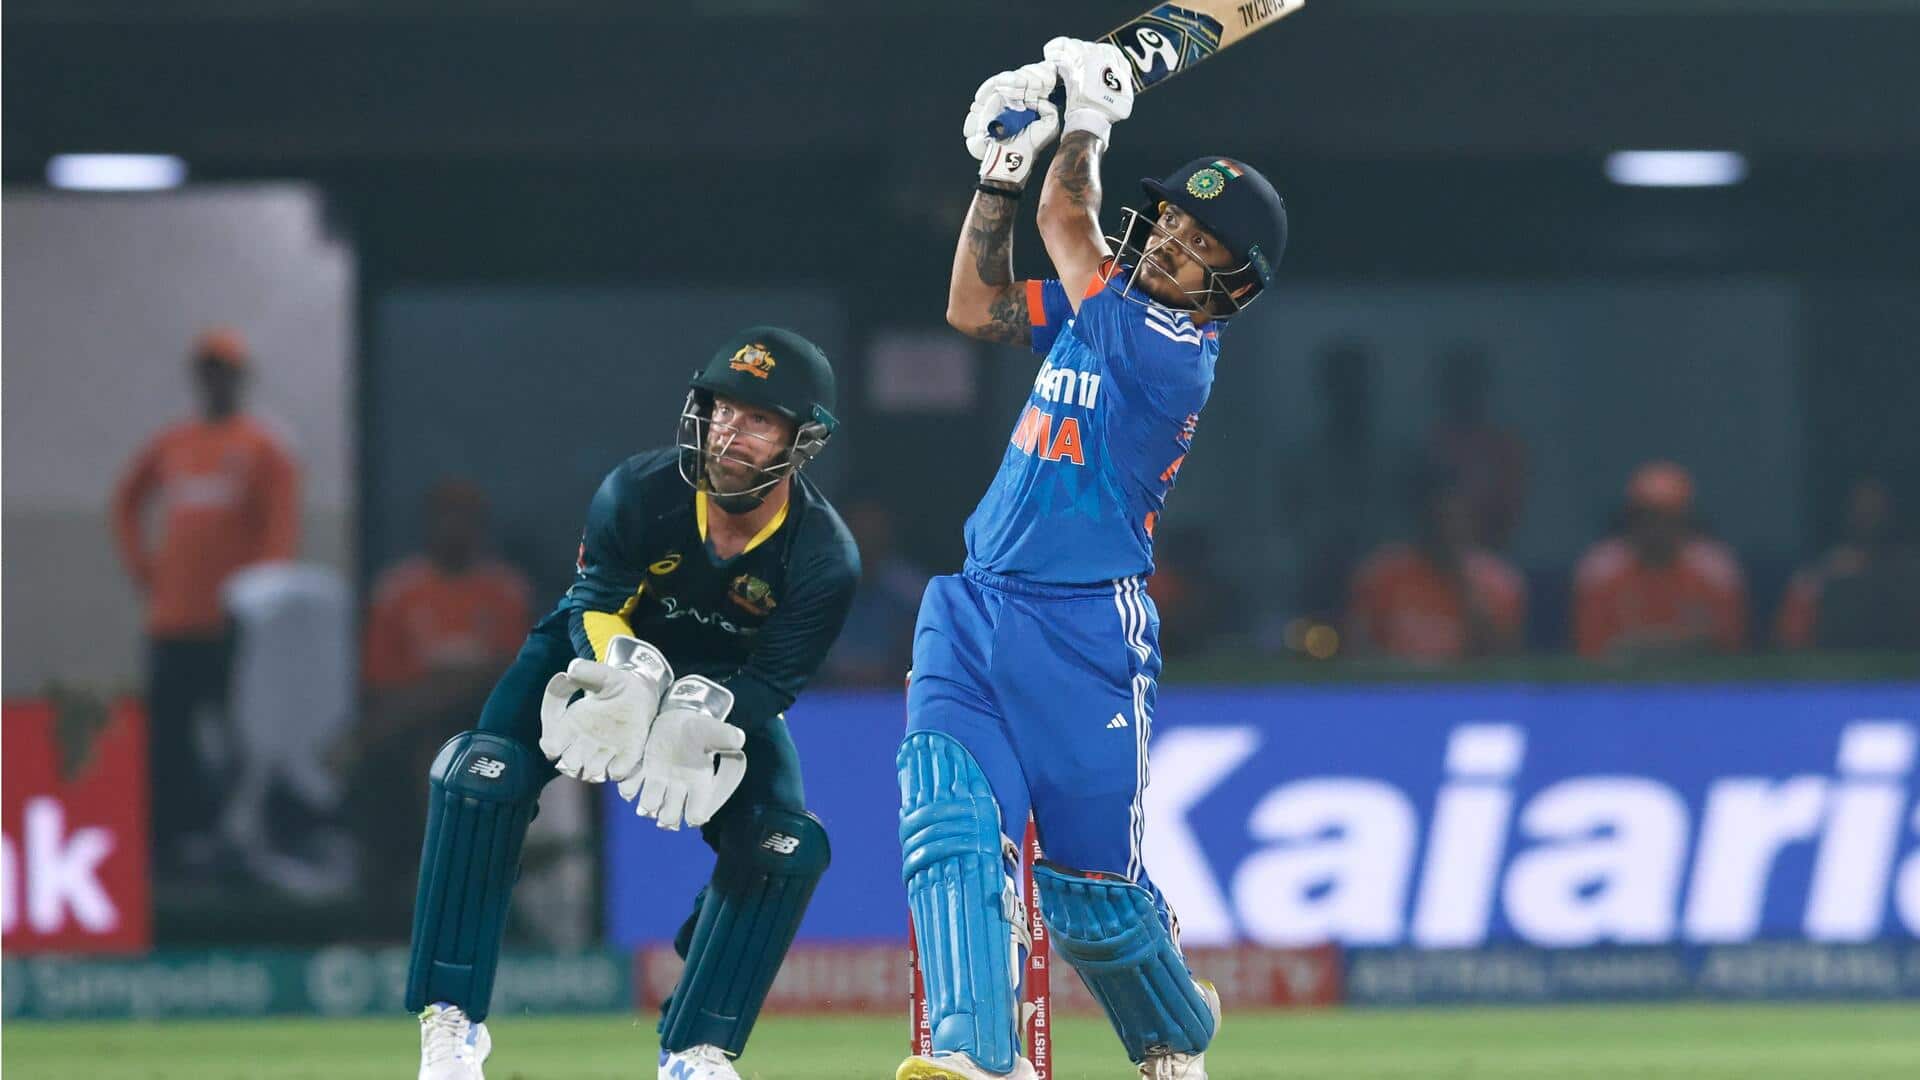 India vs Australia, 2nd T20I: Preview, stats, and Dream11 predictions